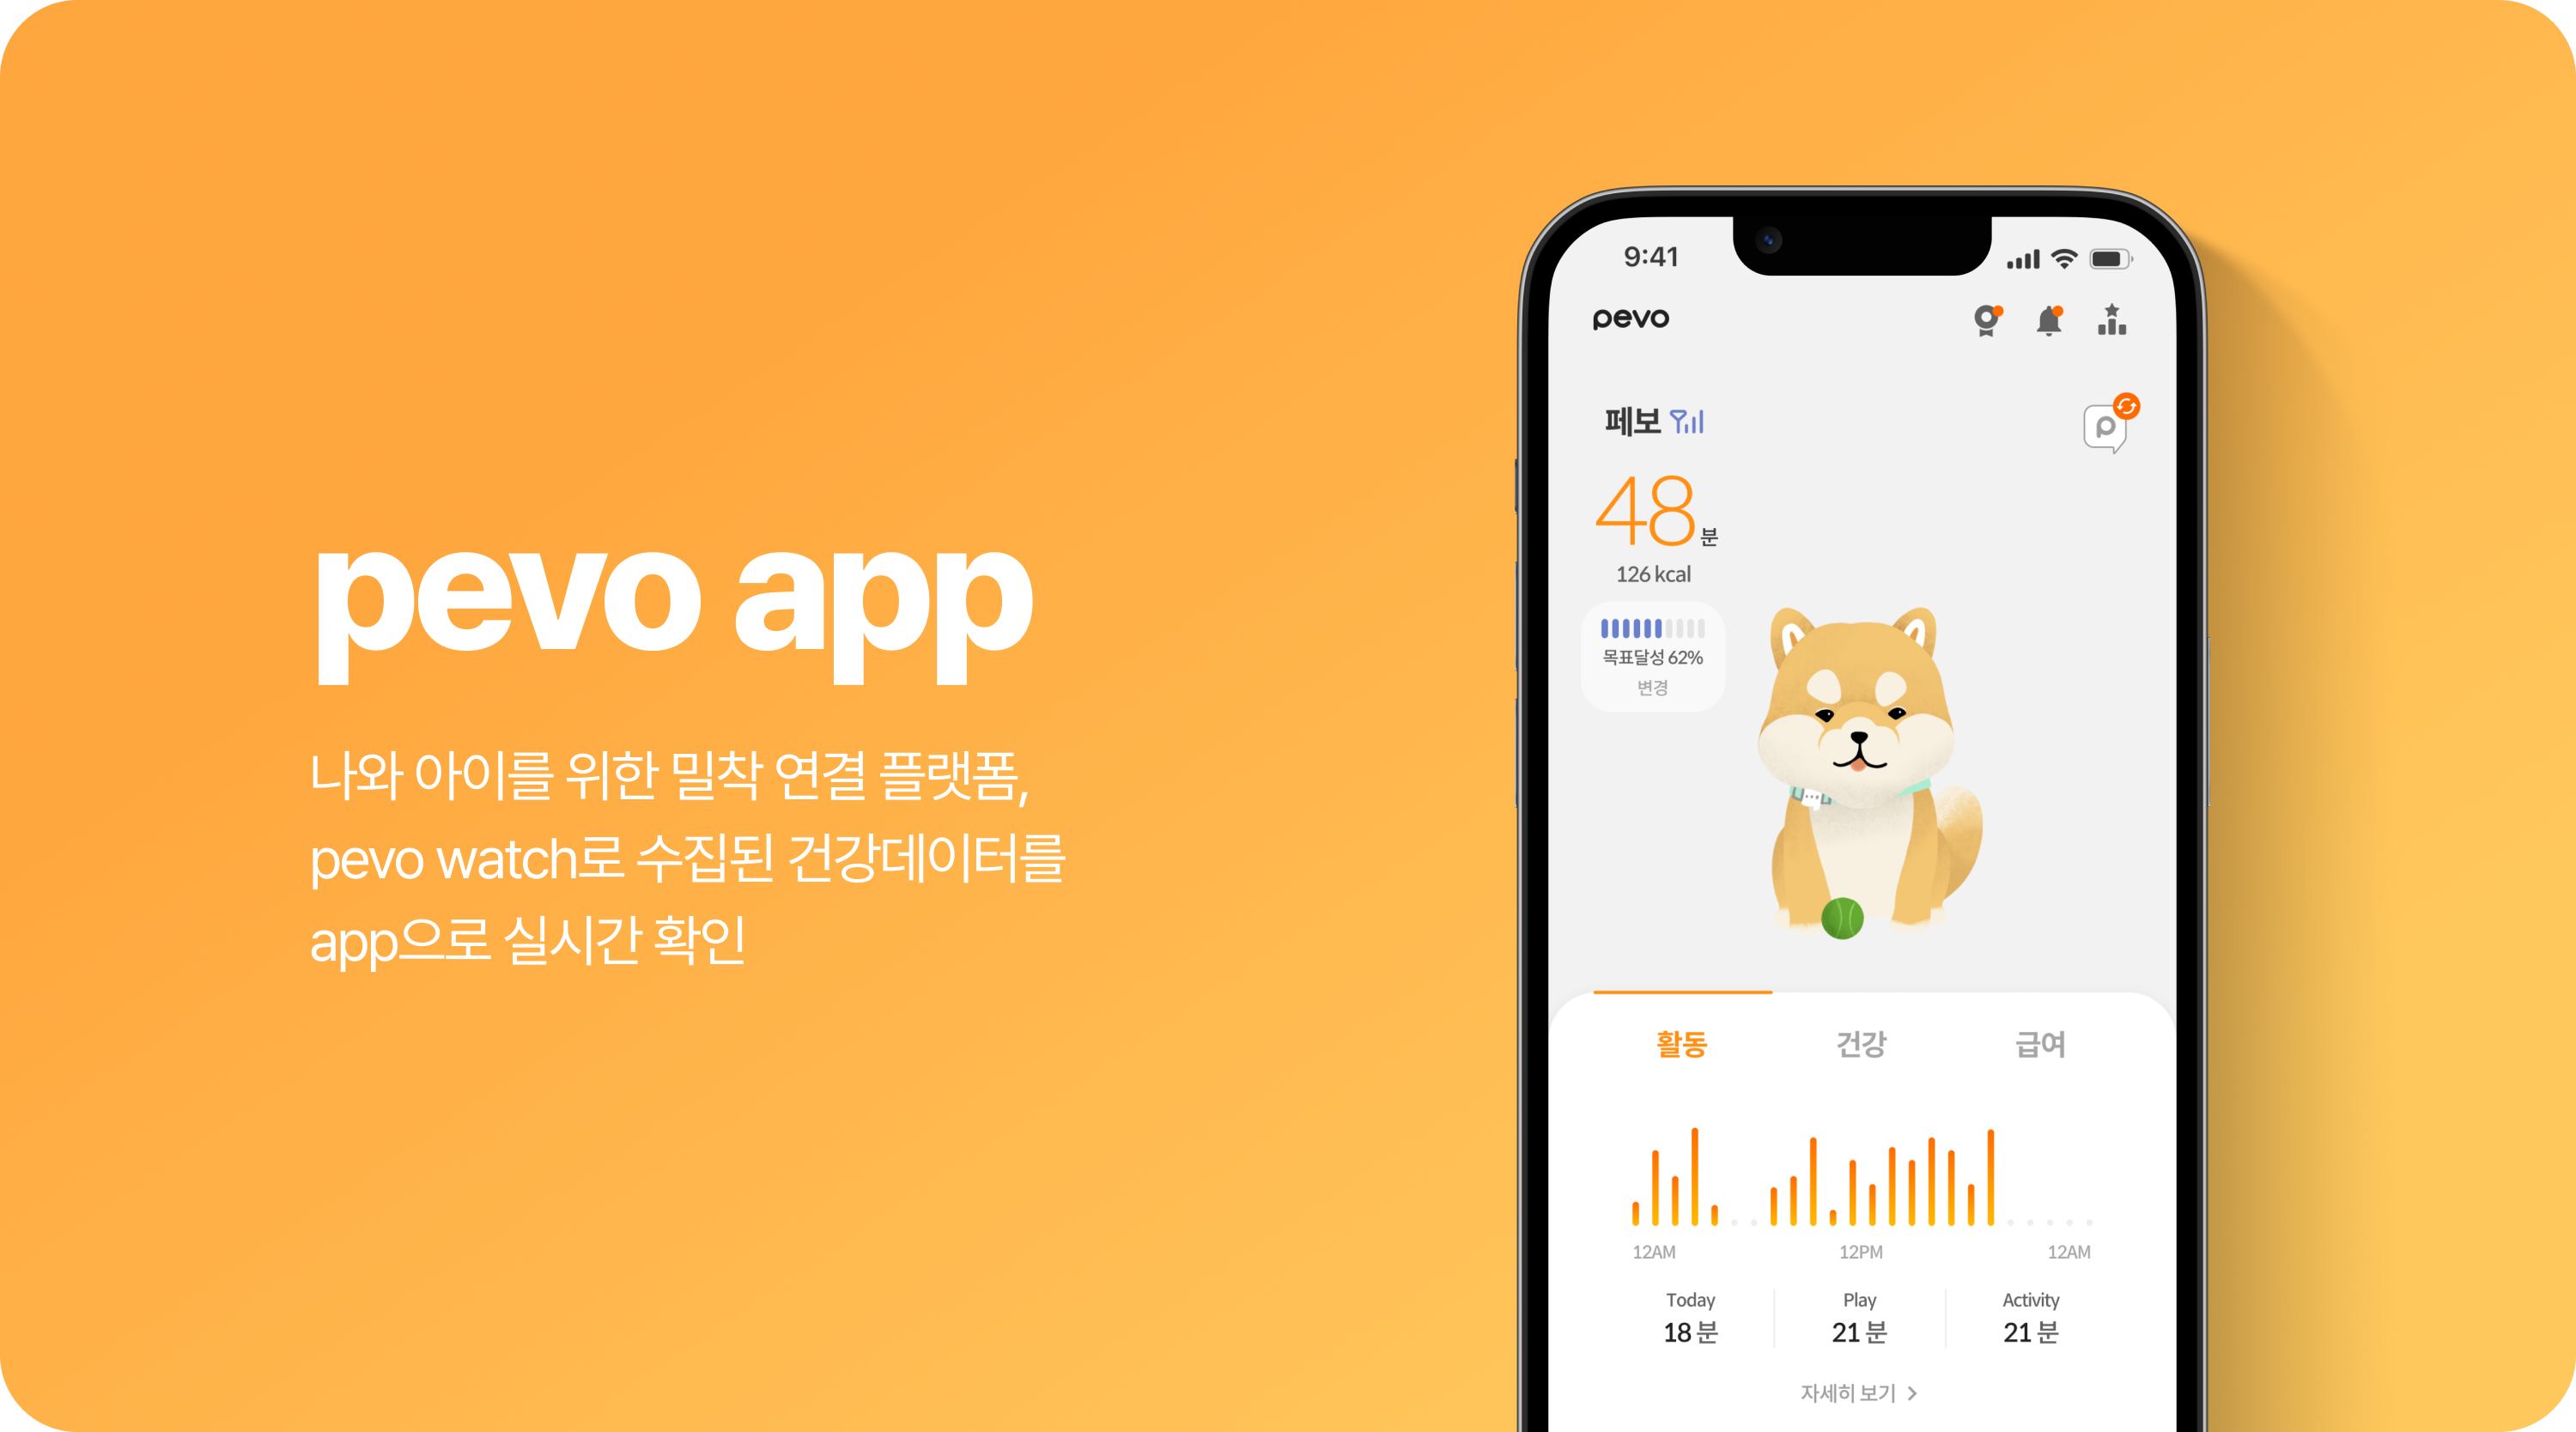 pevo app 나와 아이를 위한 밀착 연결 플랫폼, pevo watch로 수집된 건강데이터를 app으로 실시간 확인